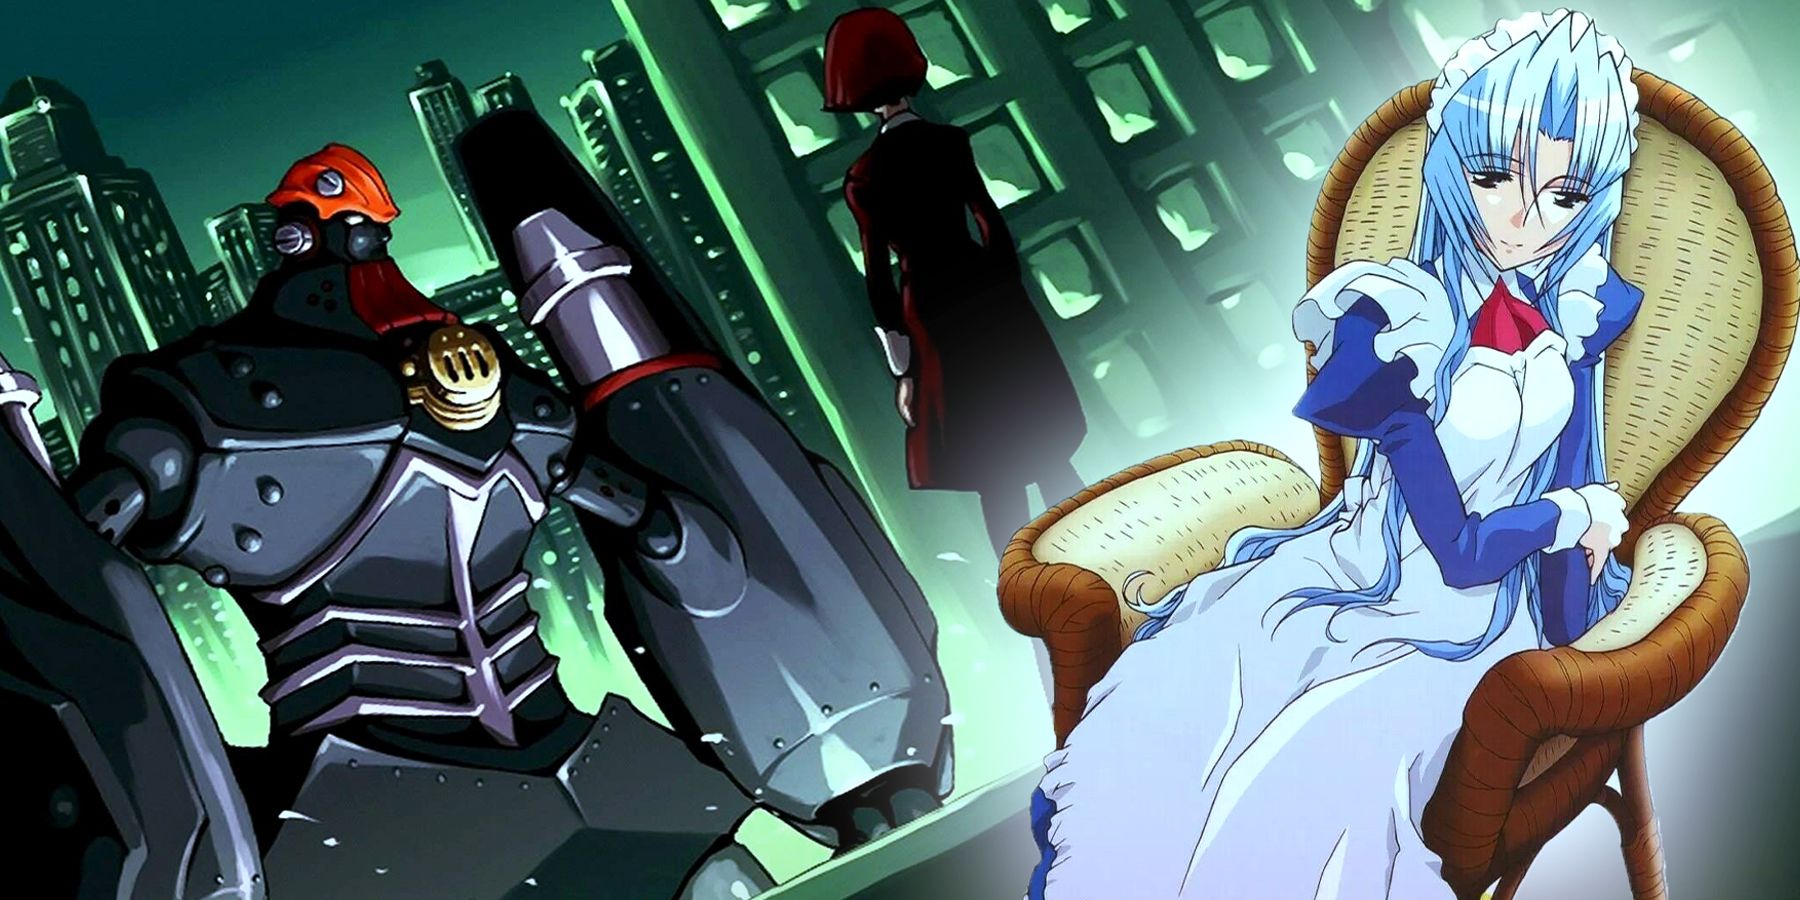 Giant Beasts of Ars Original TV Anime Announced : r/anime